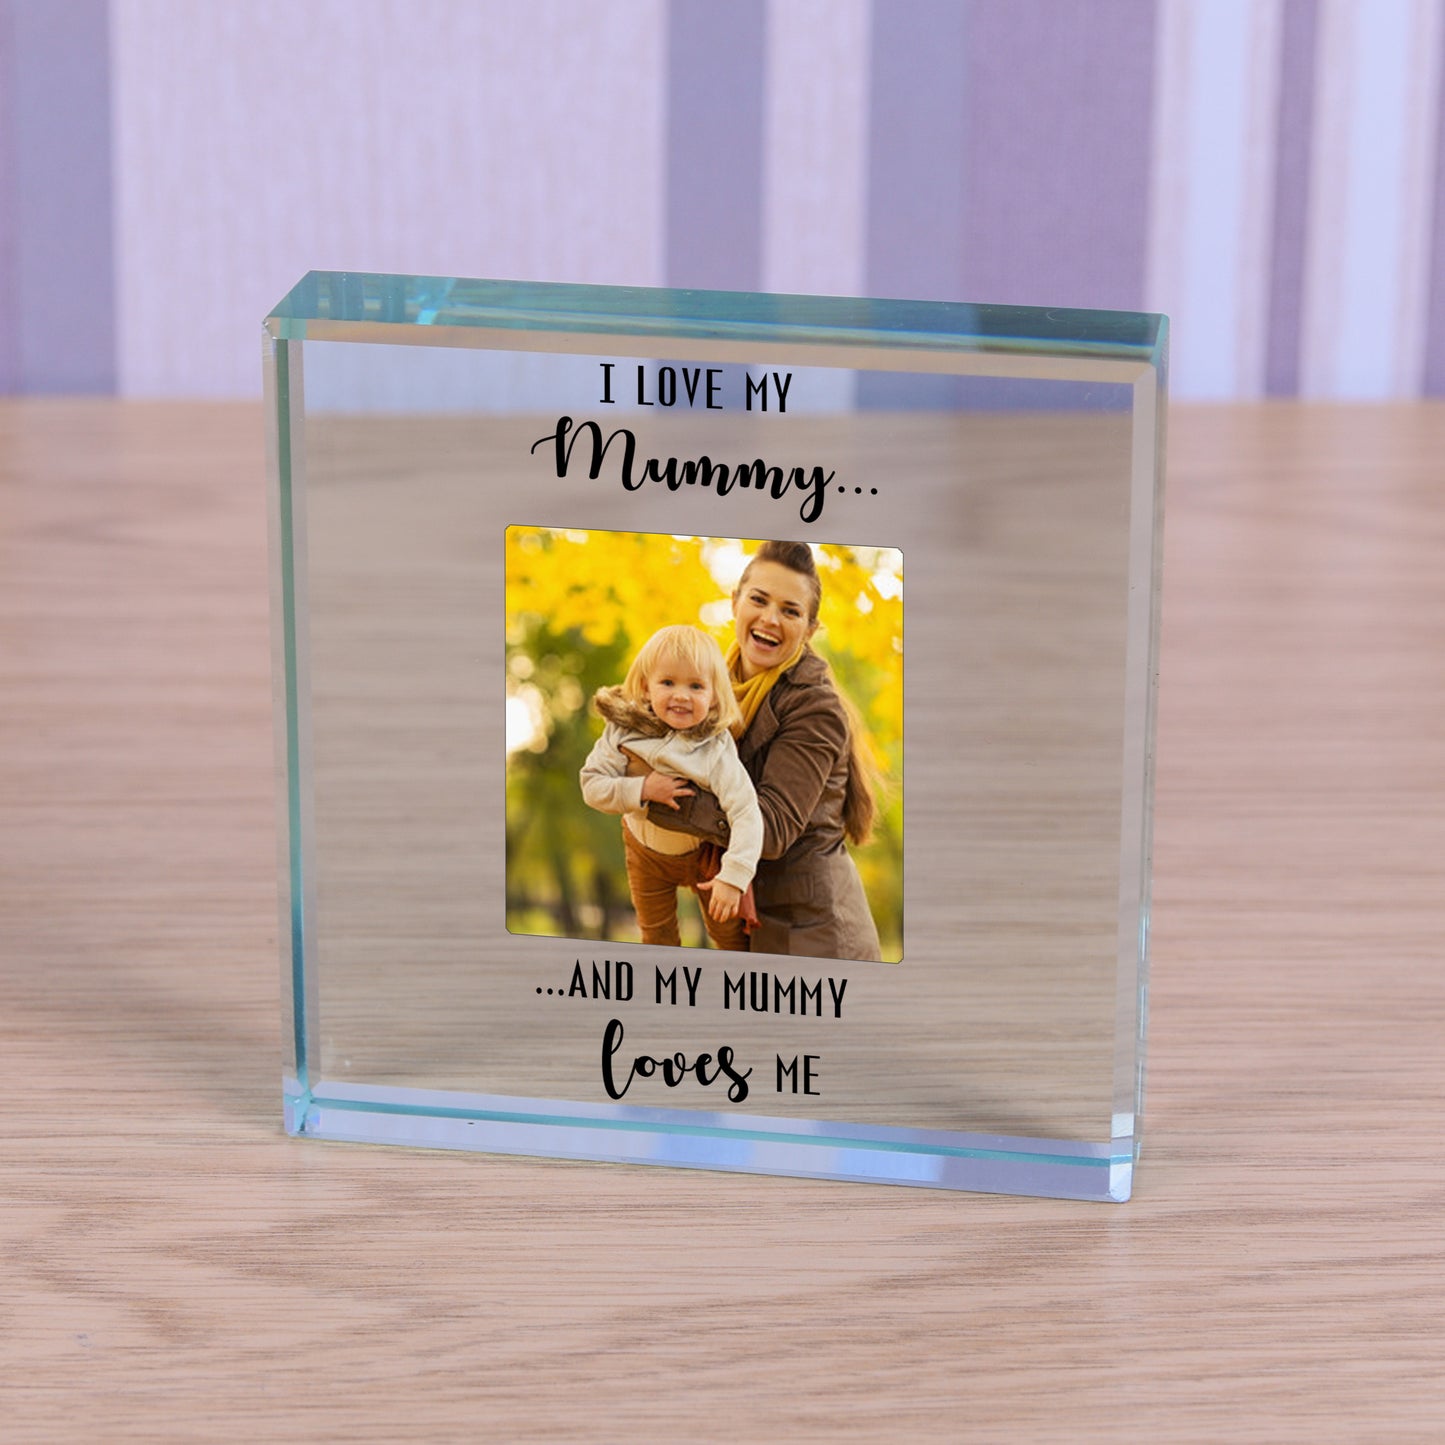  I Love My Mummy Photo Block Frame